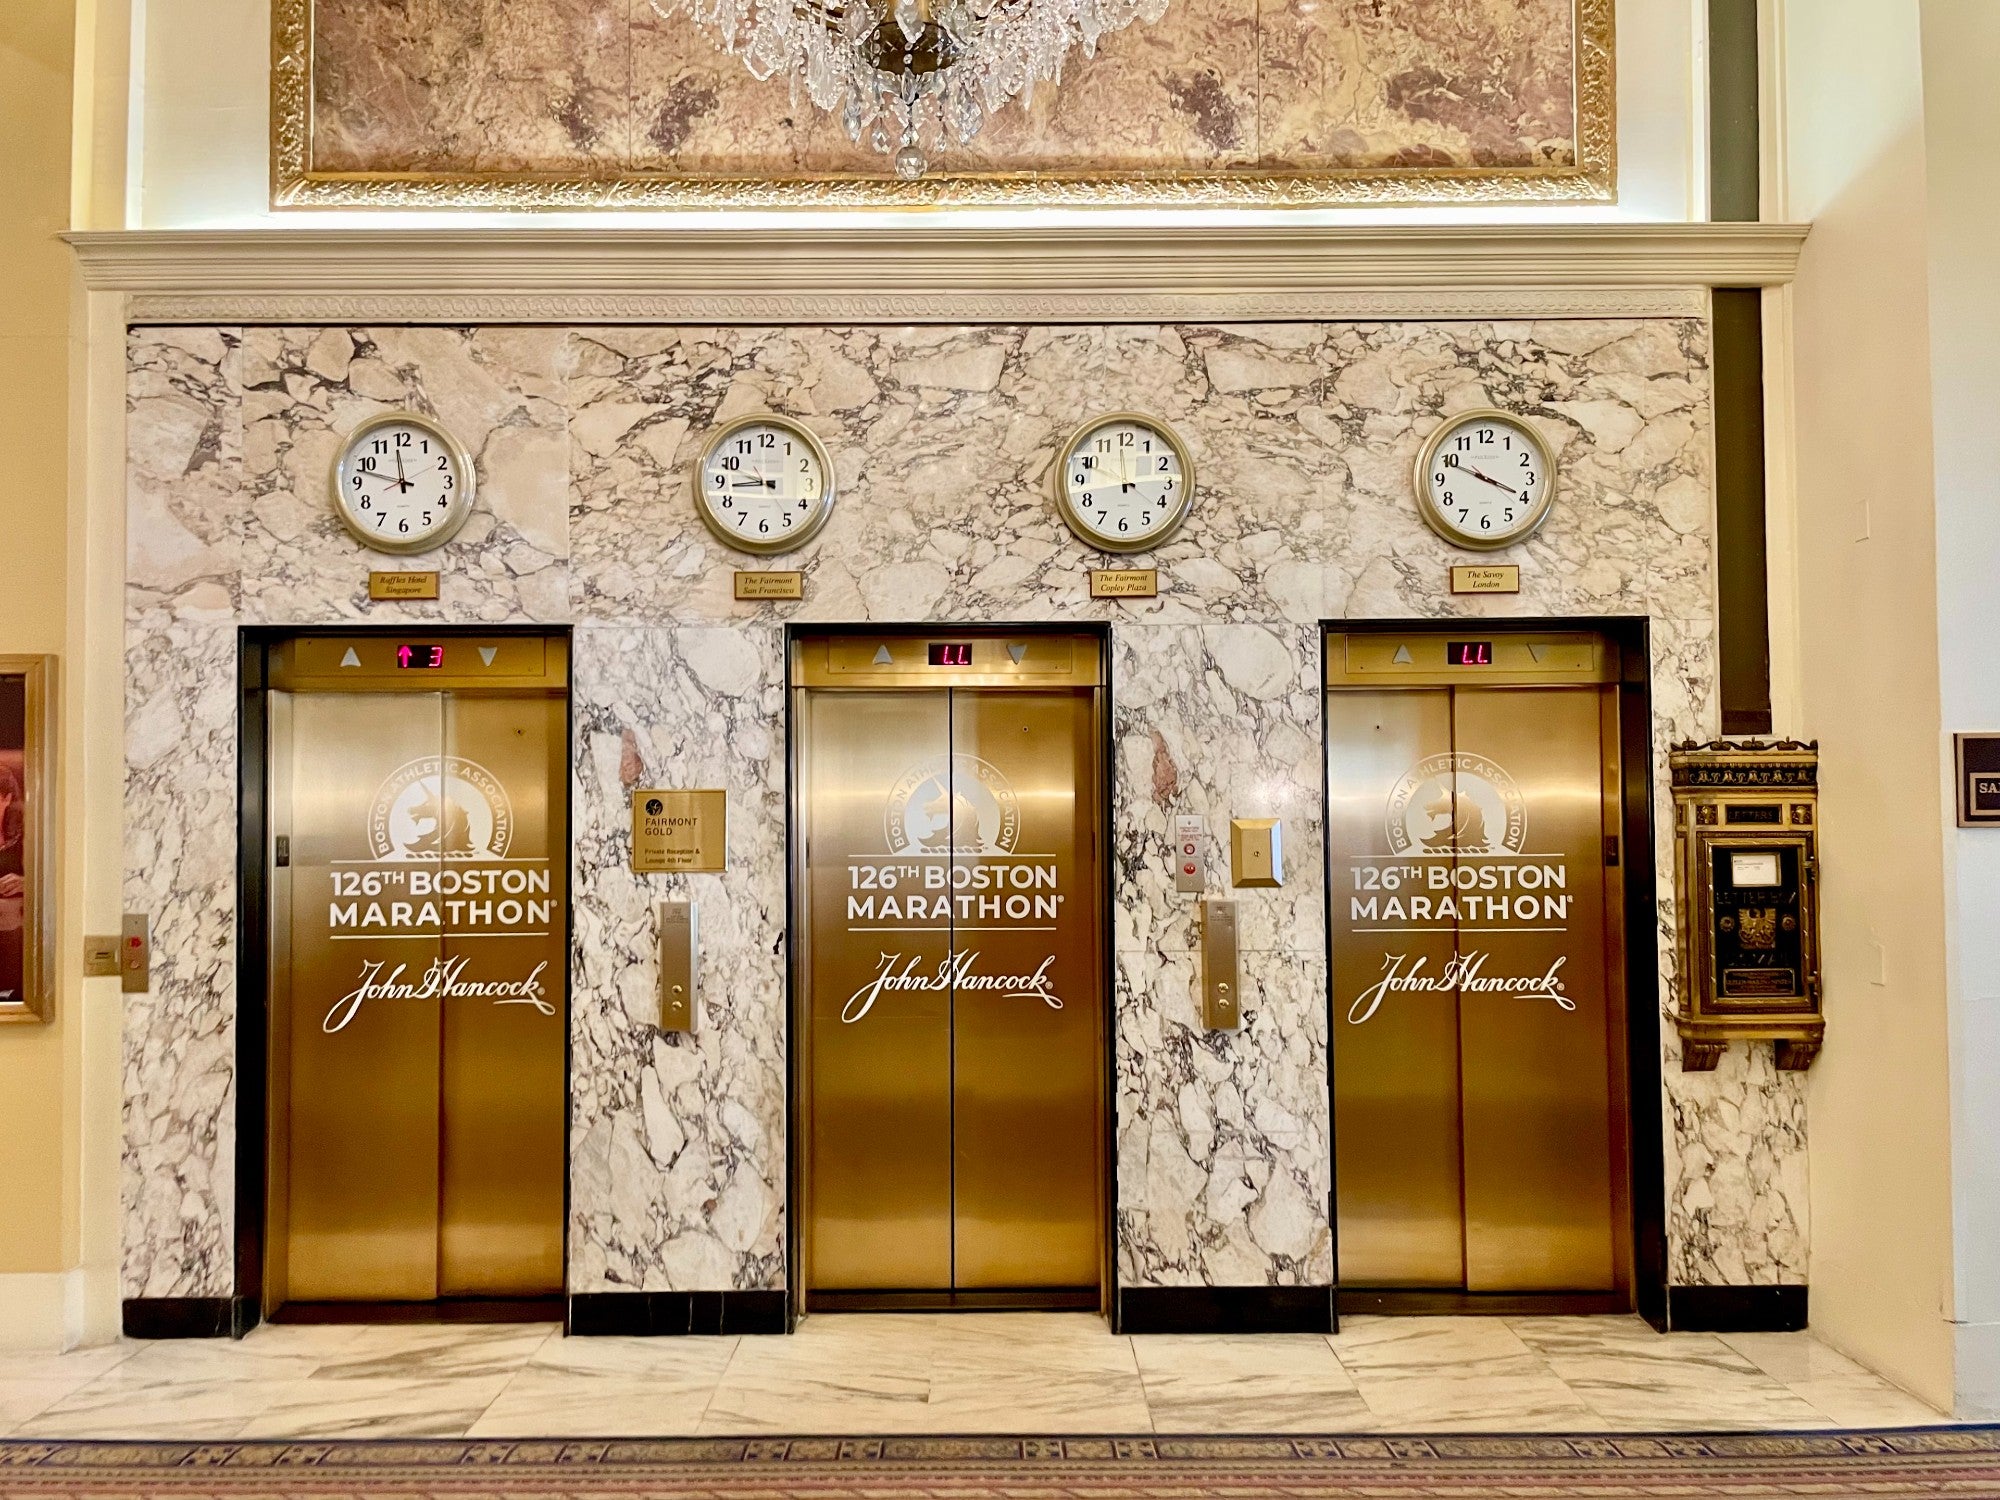 Fairmont Copley elevators wrapped for the Boston Marathon 2022